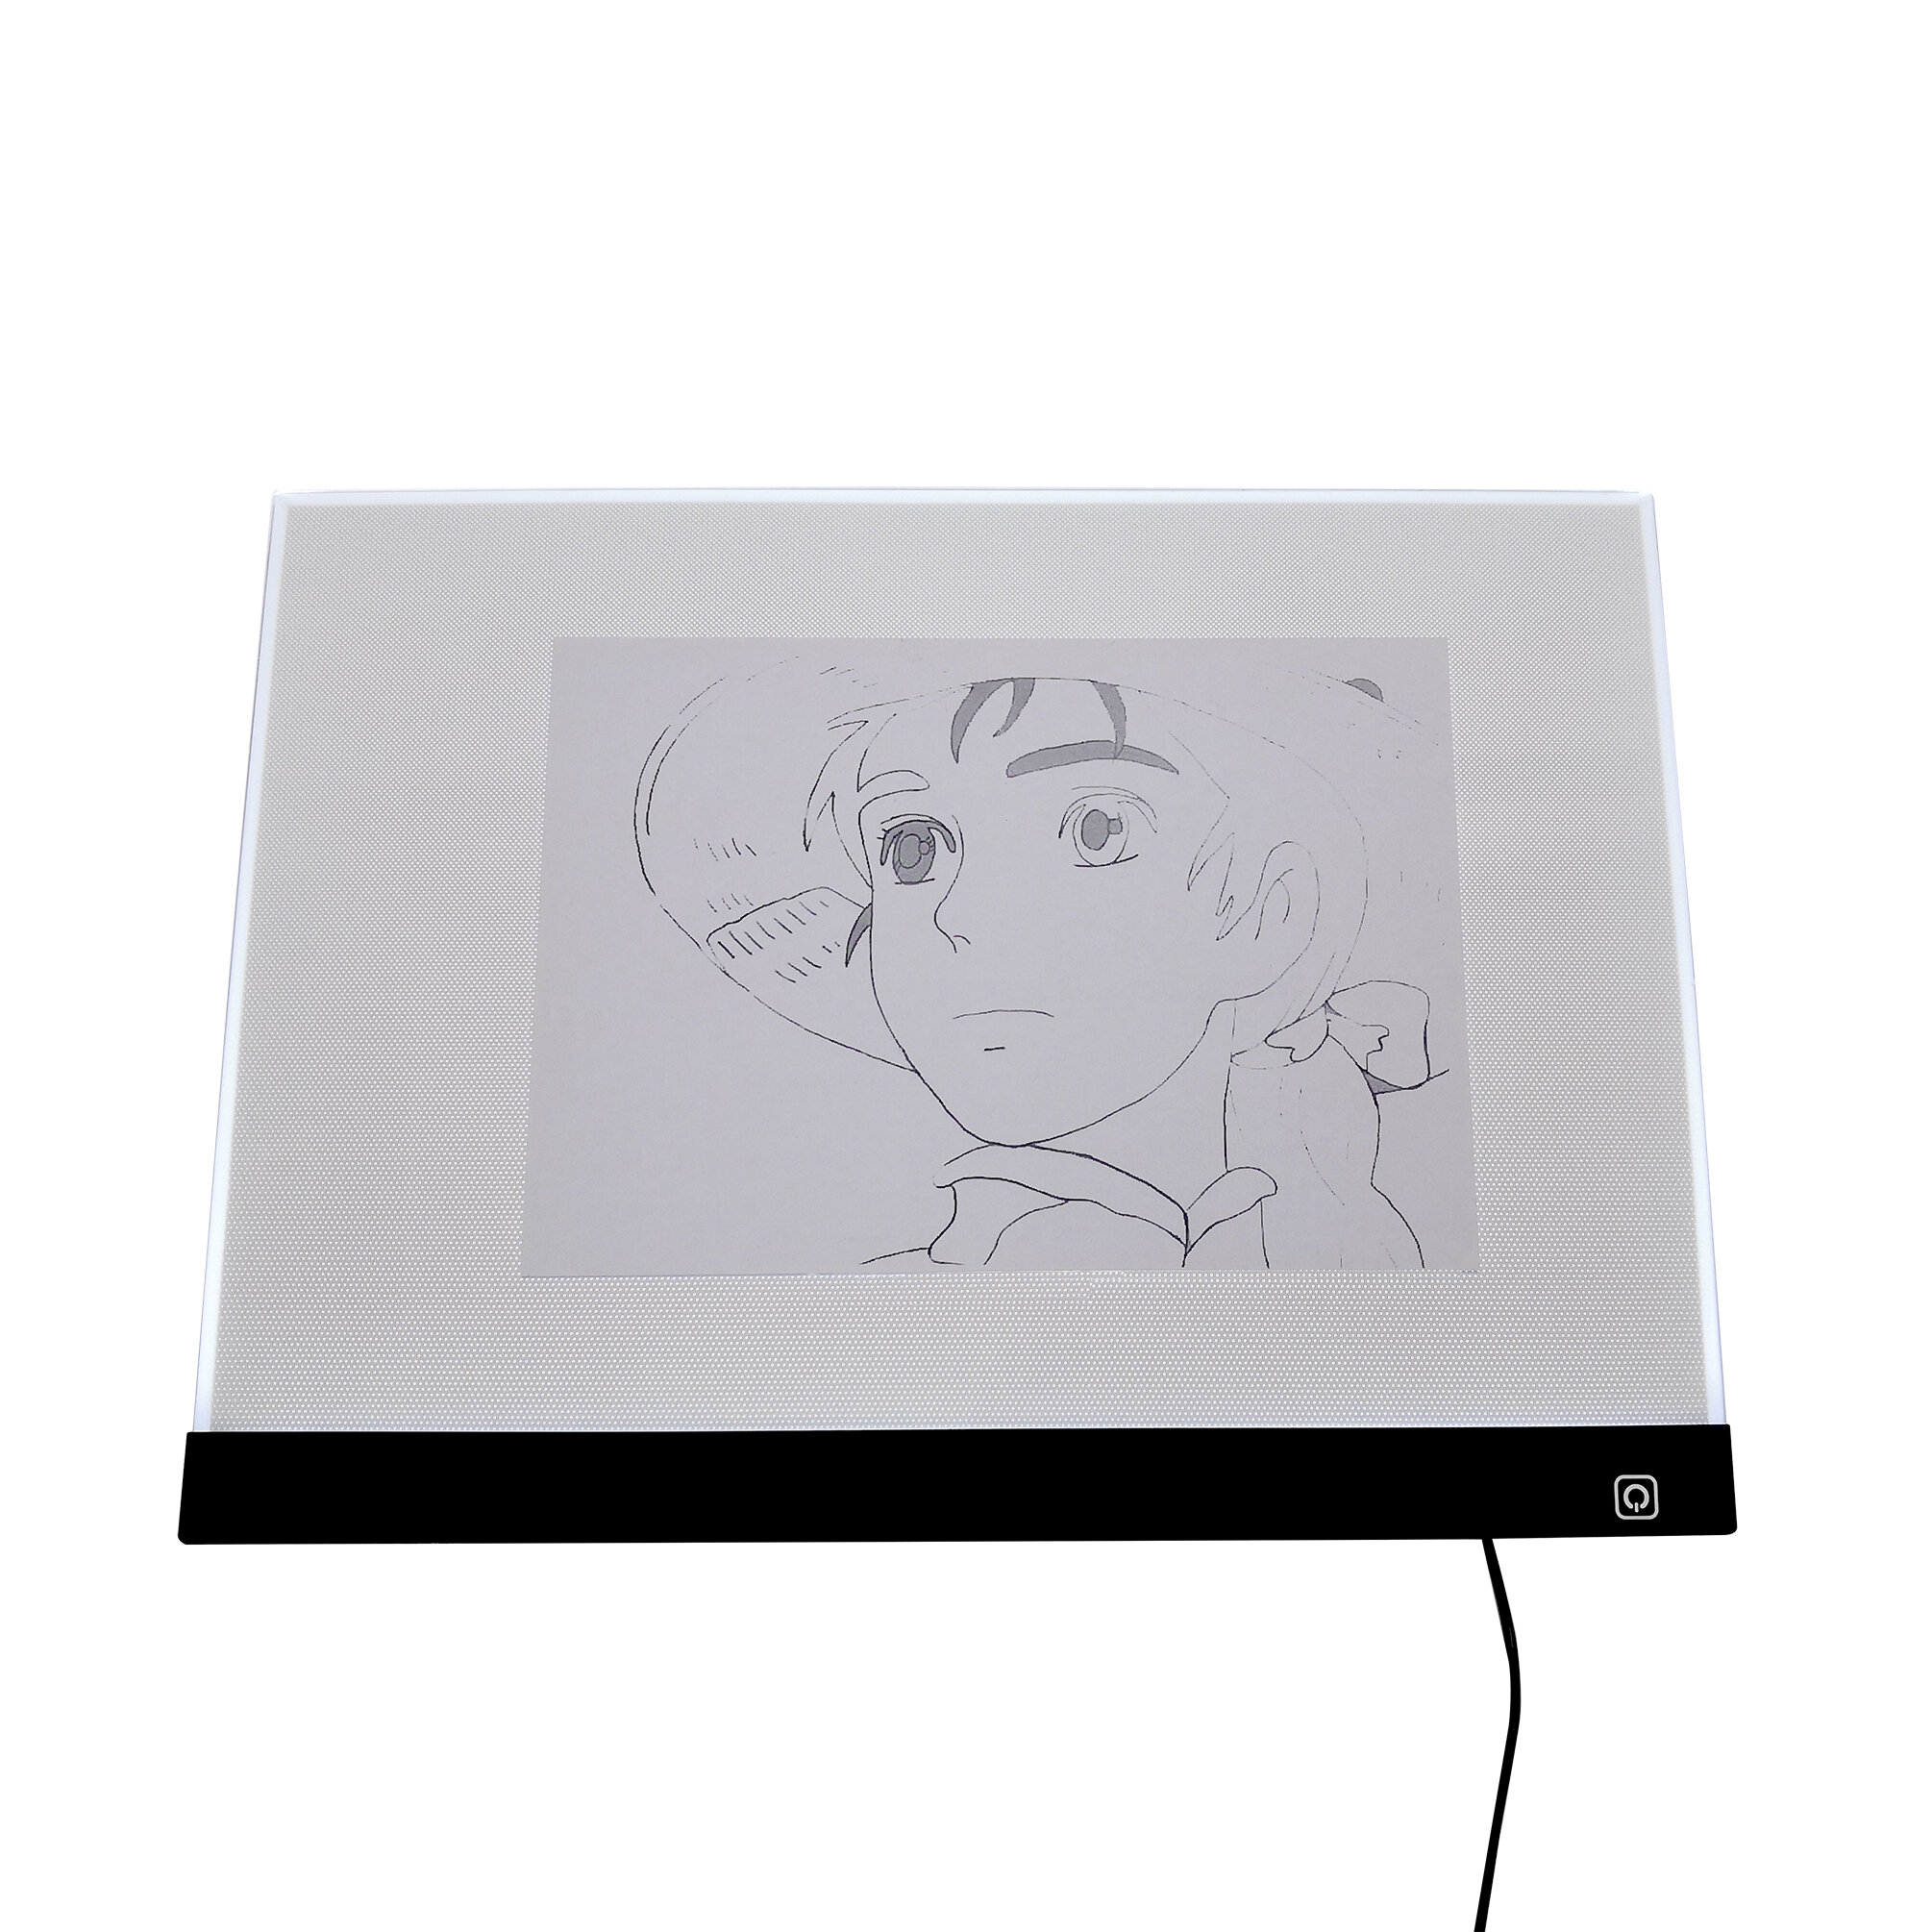 FixtureDisplays Tracing Light Box LED Animation Art Board & Reviews |  Wayfair